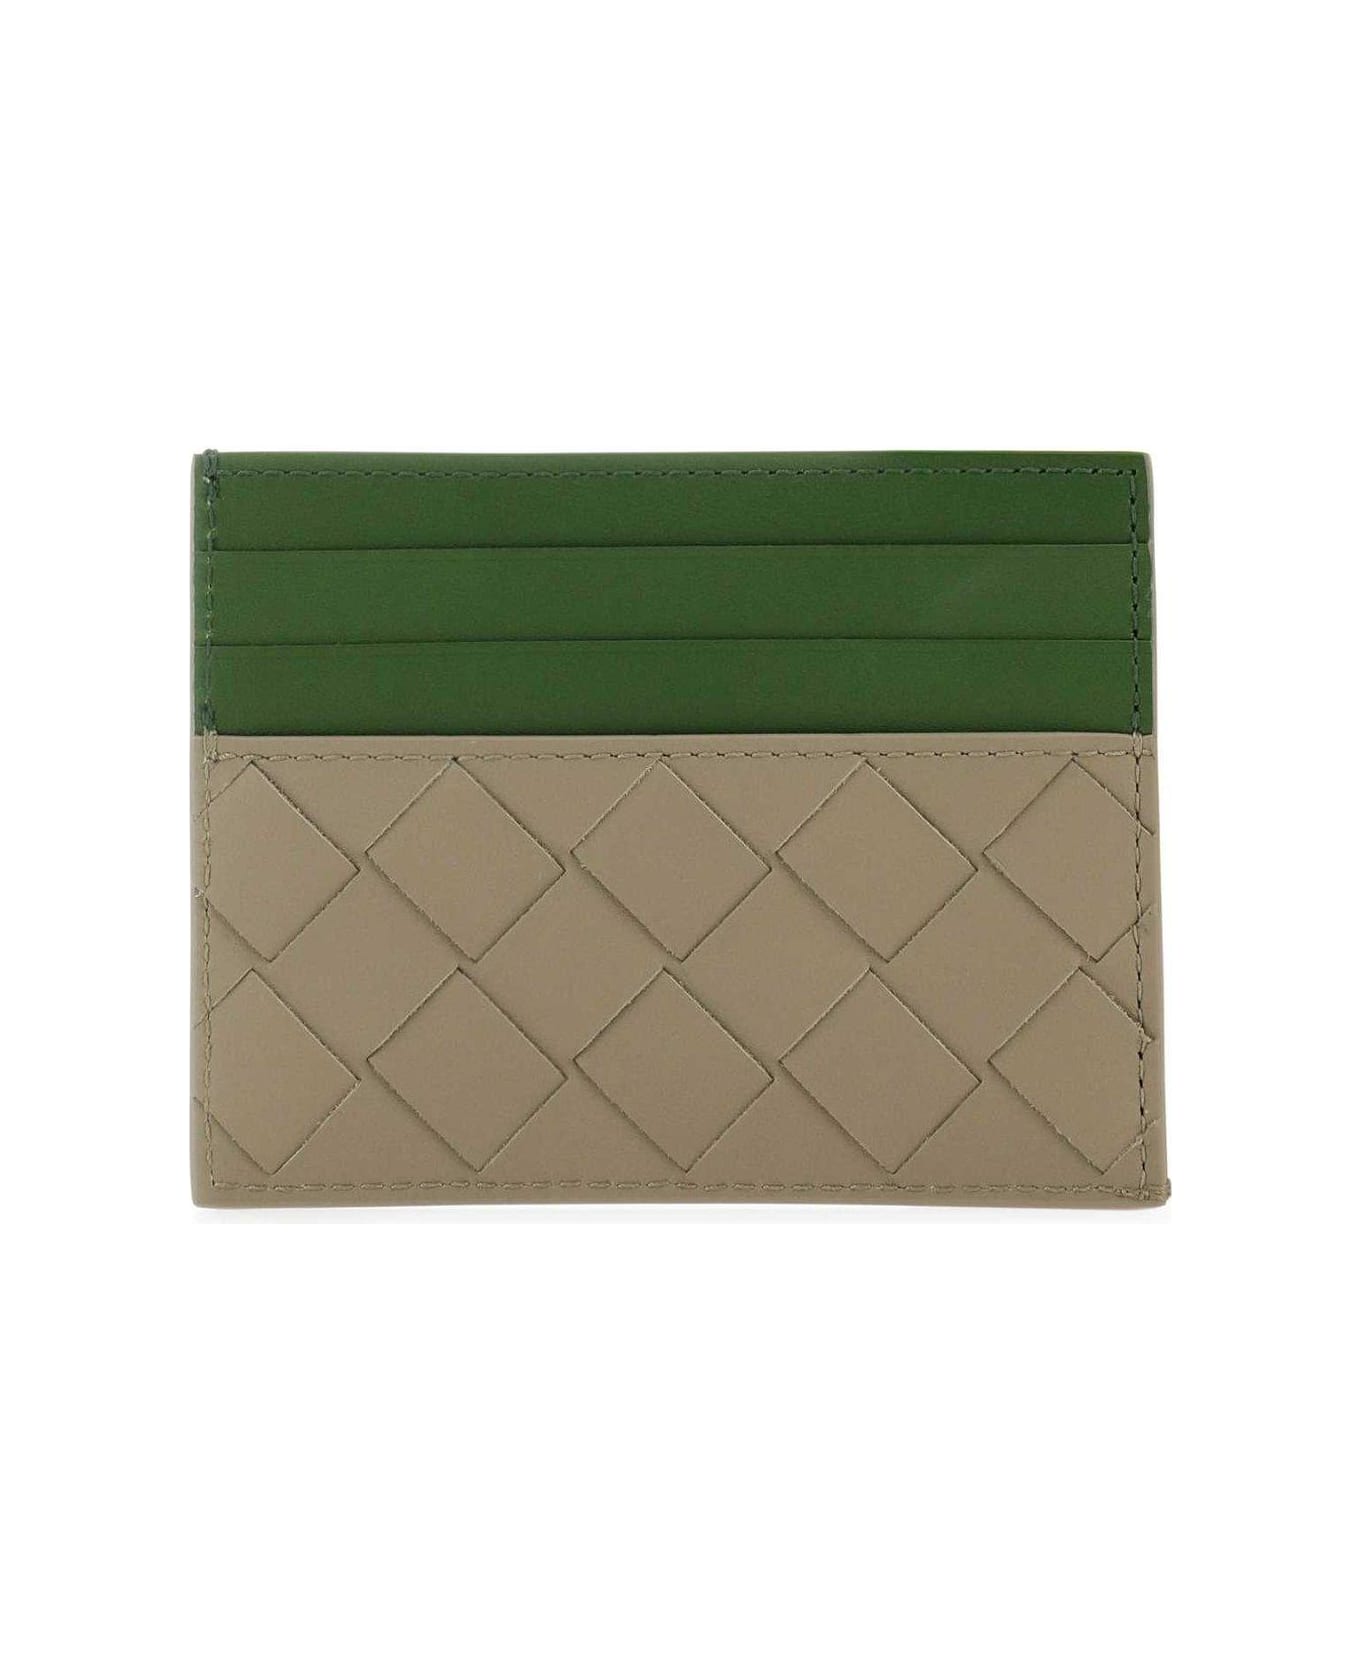 Bottega INTRECCIATO Veneta Woven Leather Card Holder - Taupe, avocado